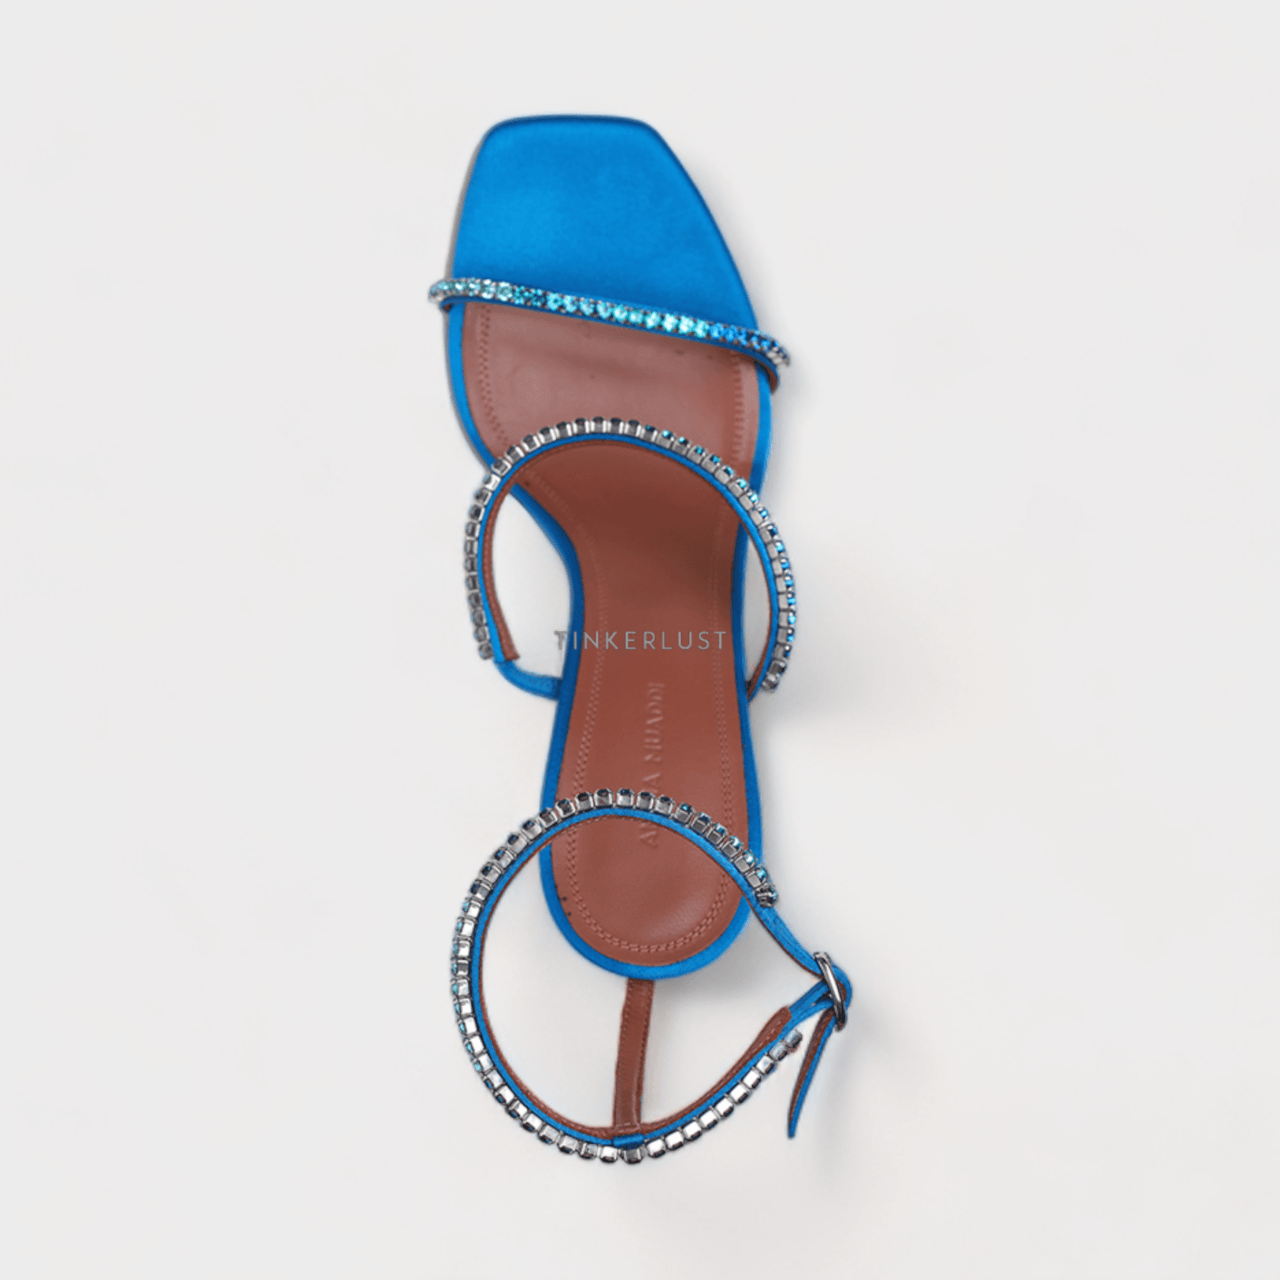 AMINA MUADDI Women Gilda Silk Sandals 95mm in Blue Satin with CrystalsAMINA MUADDI Women Gilda Silk Sandals 95mm in Blue Satin with Crystals